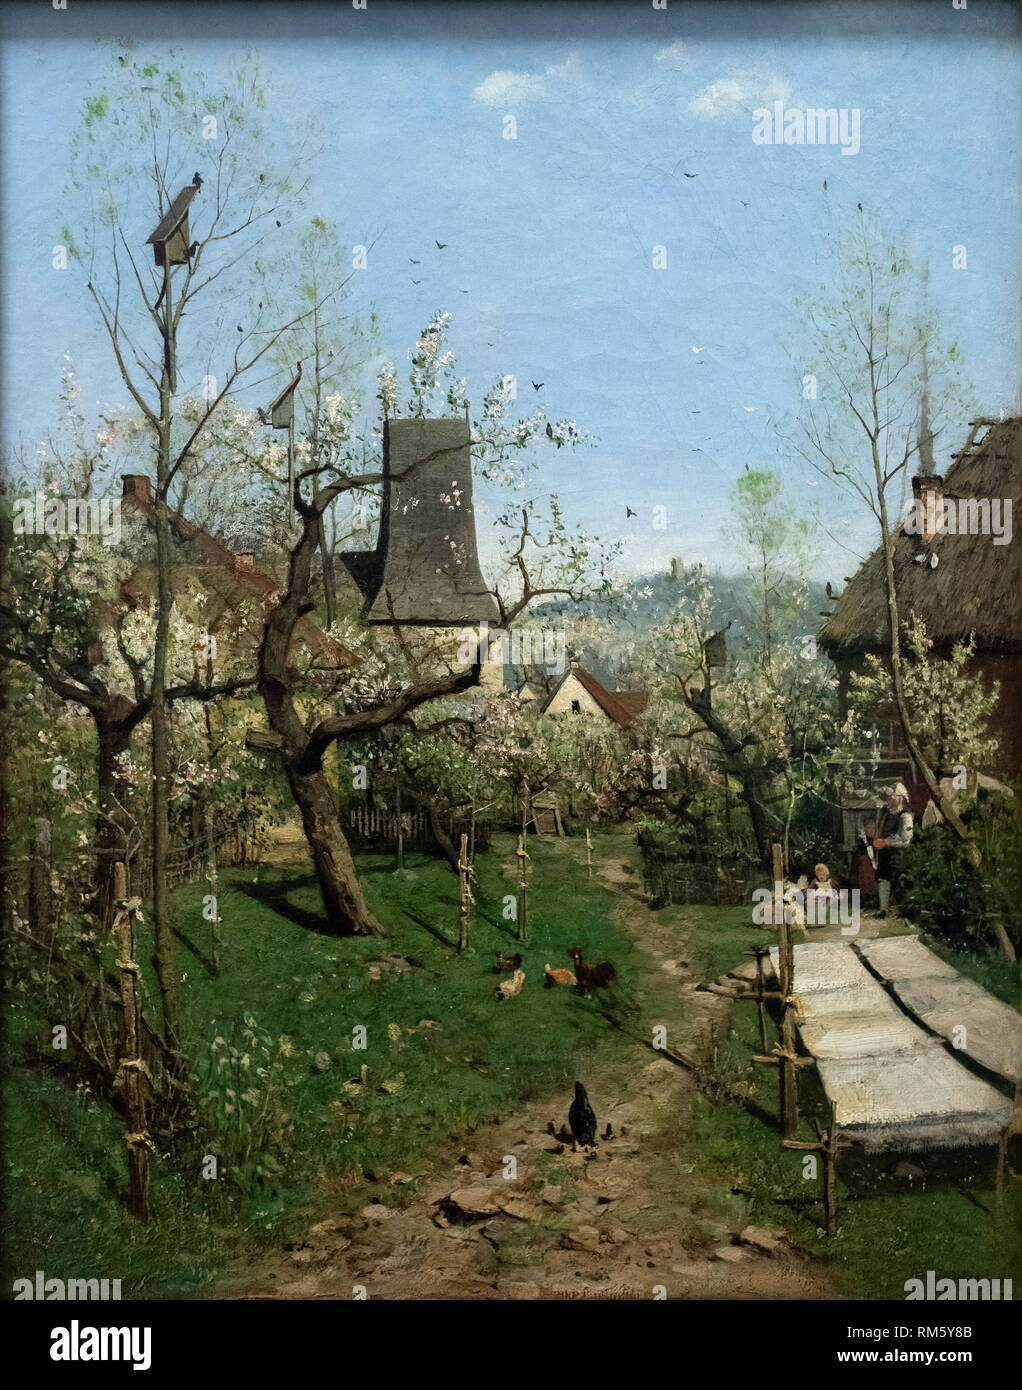 Karl Buchholz (1849-1898), el muelle de la aldea, ca. 1872. Frühling auf dem Dorf. Alte Nationalgalerie, Berlín, Alemania. Foto de stock